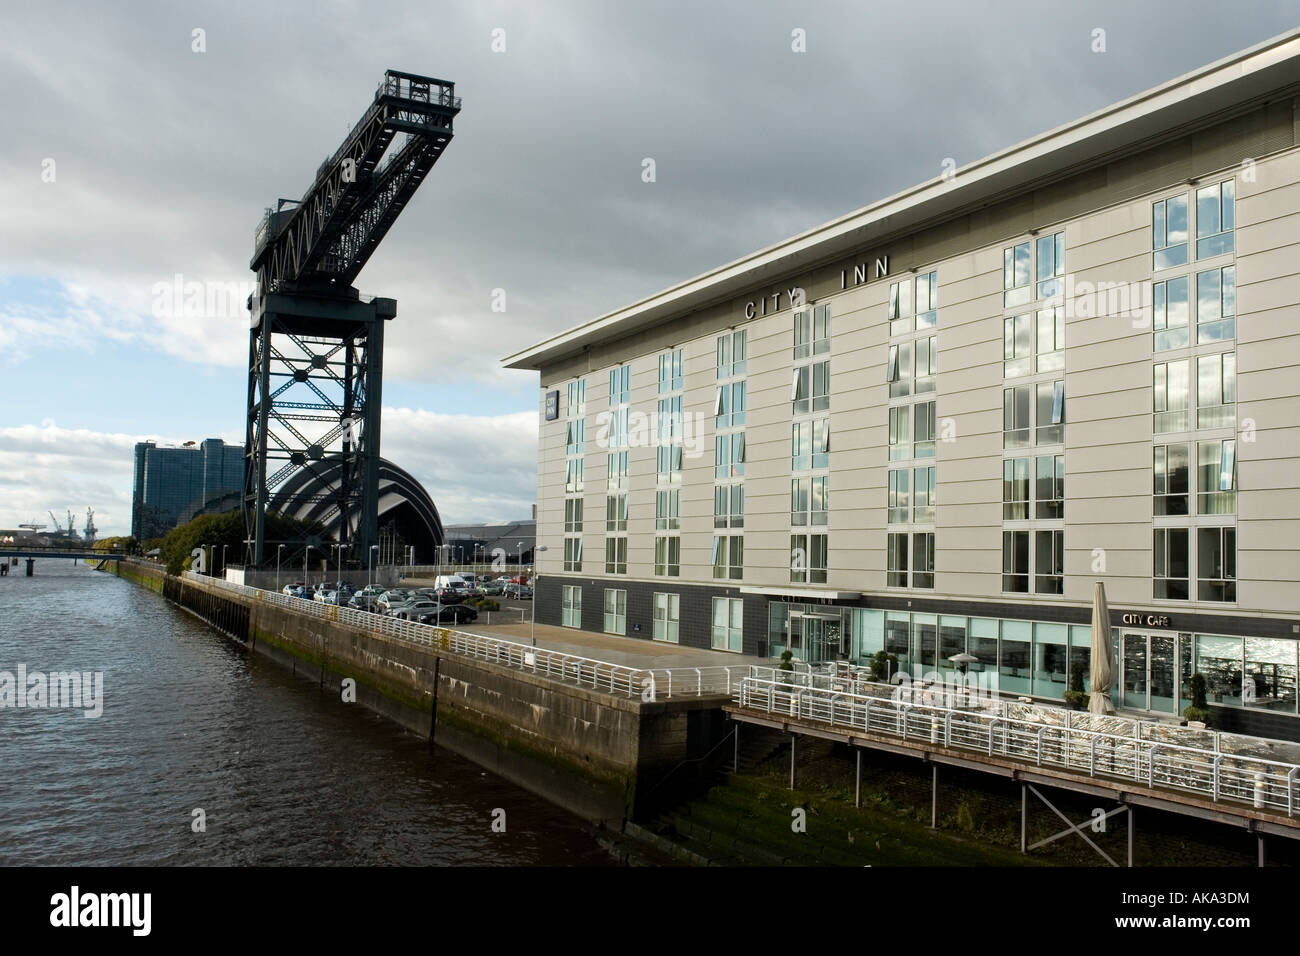 City Inn hotel Finnieston crane and Clyde Auditorium river clyde,Glasgow Scotland Europe Stock Photo